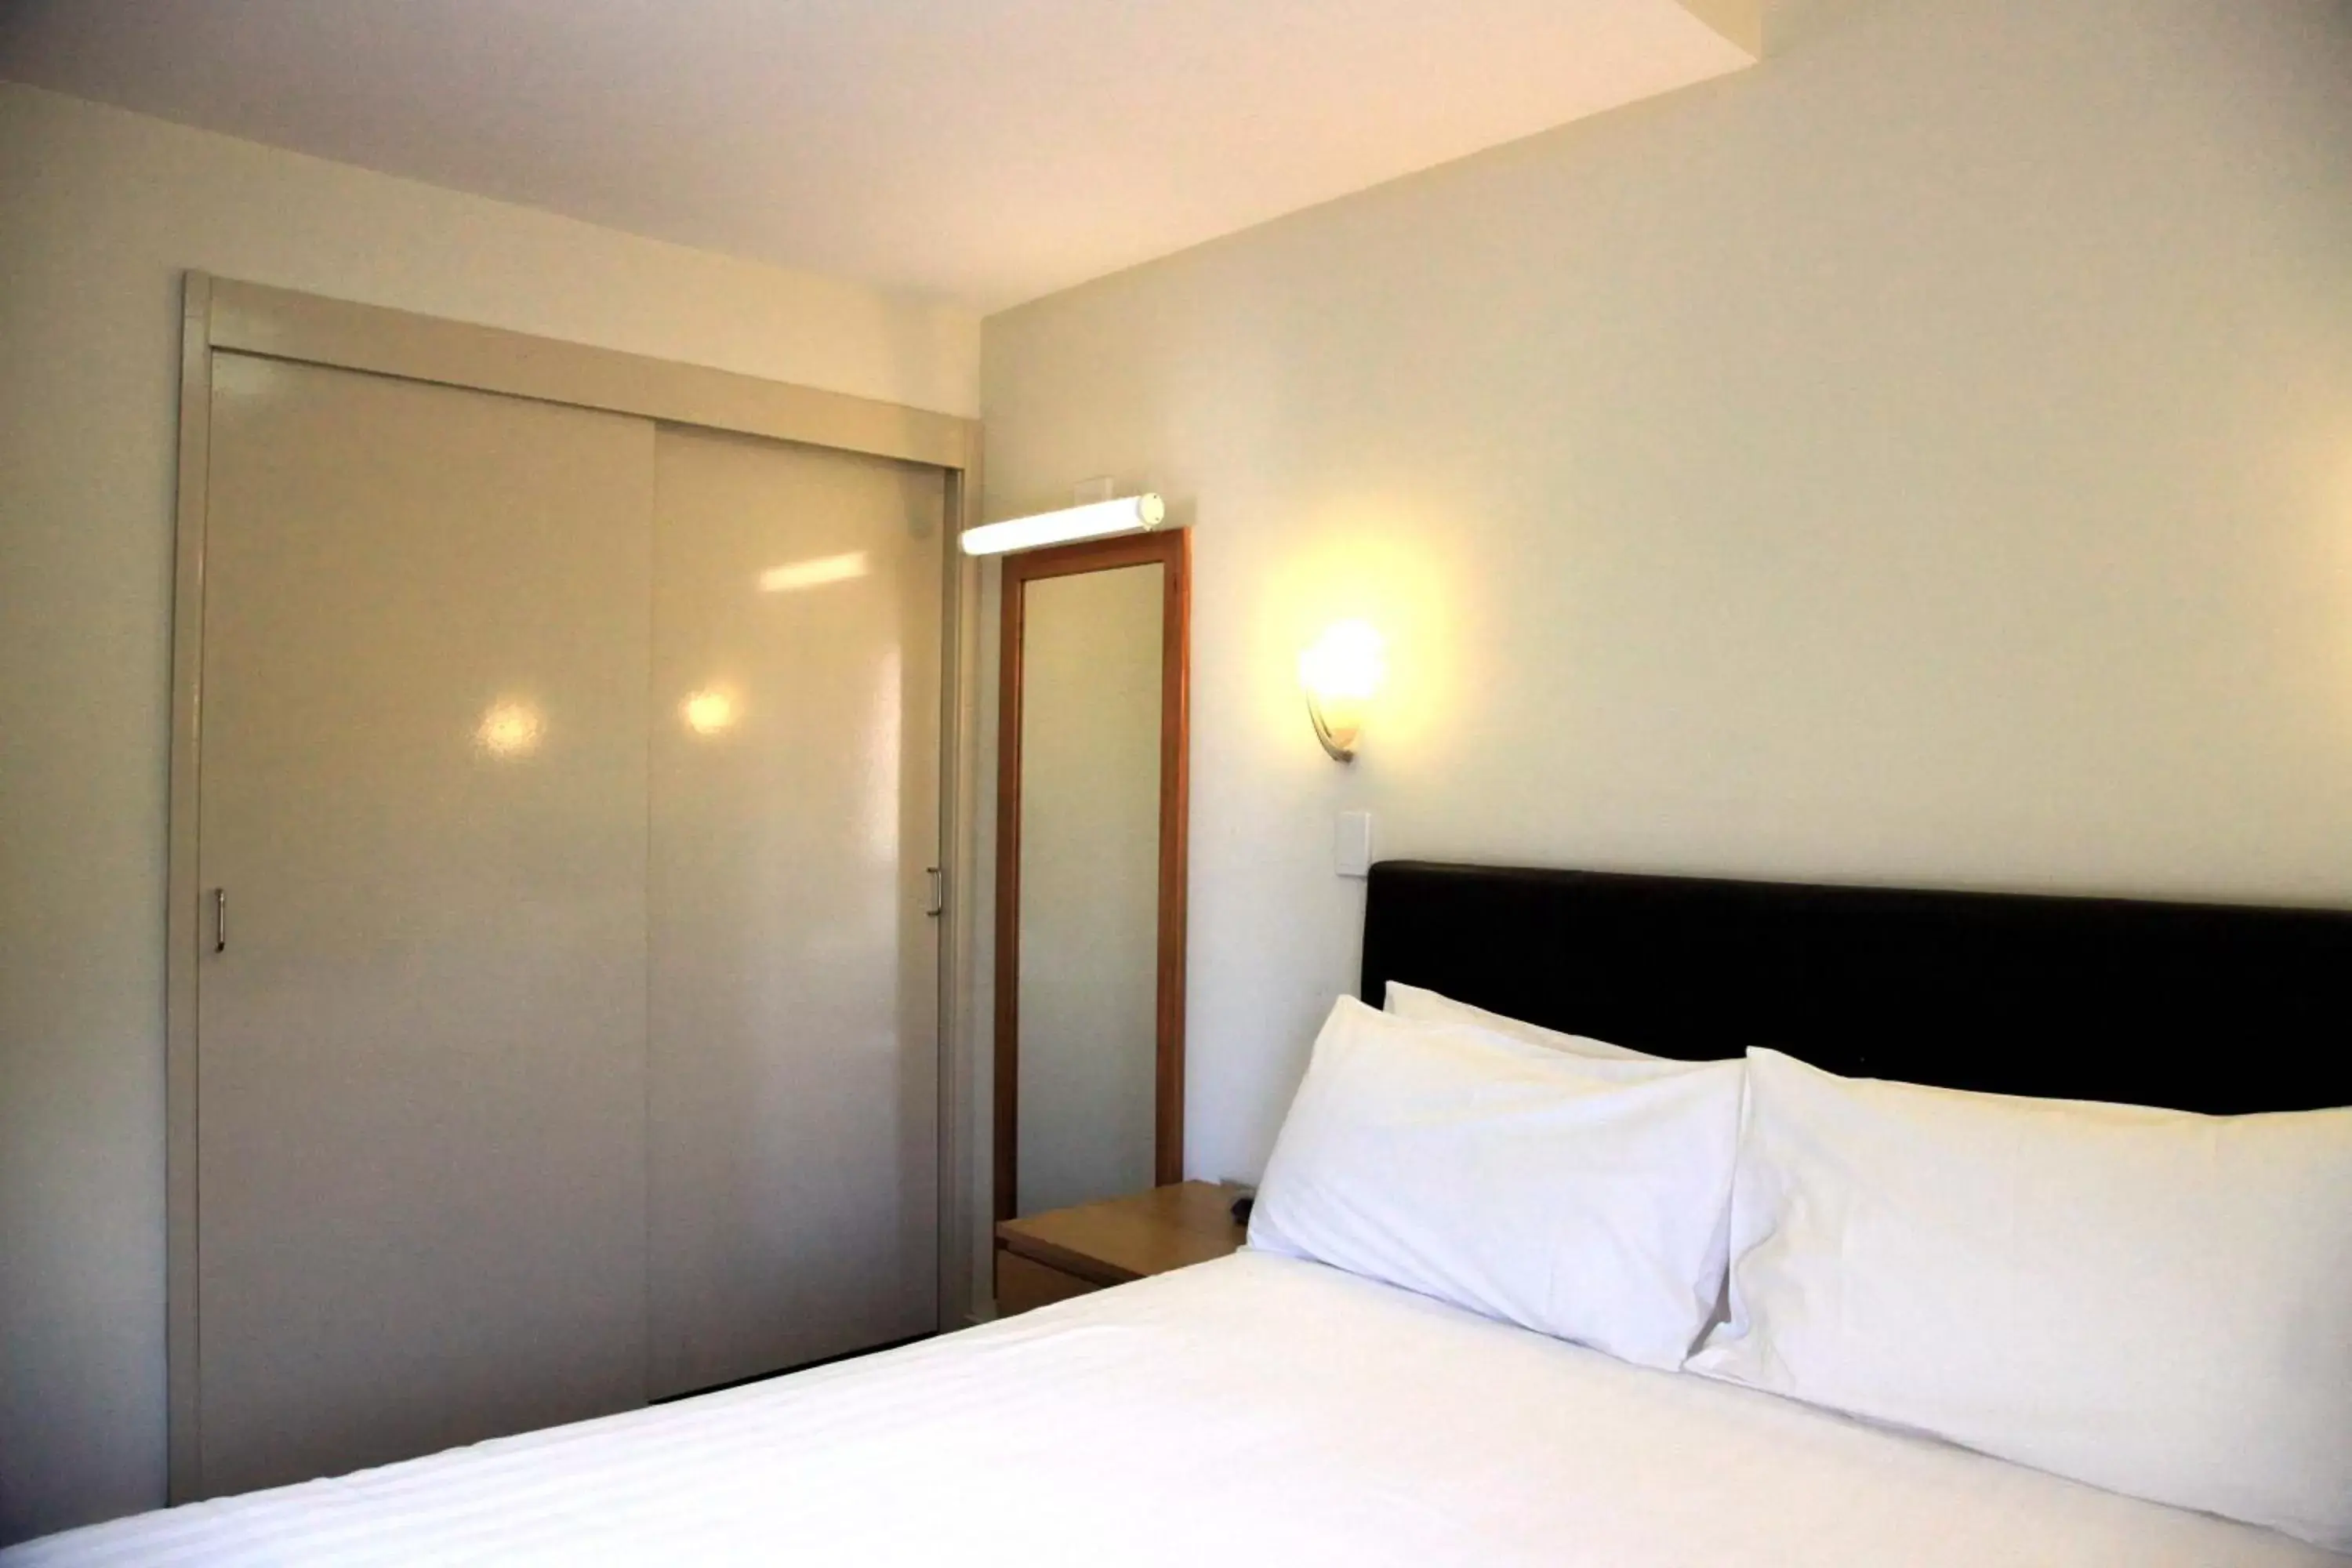 Bed, Room Photo in Travellers Motor Village